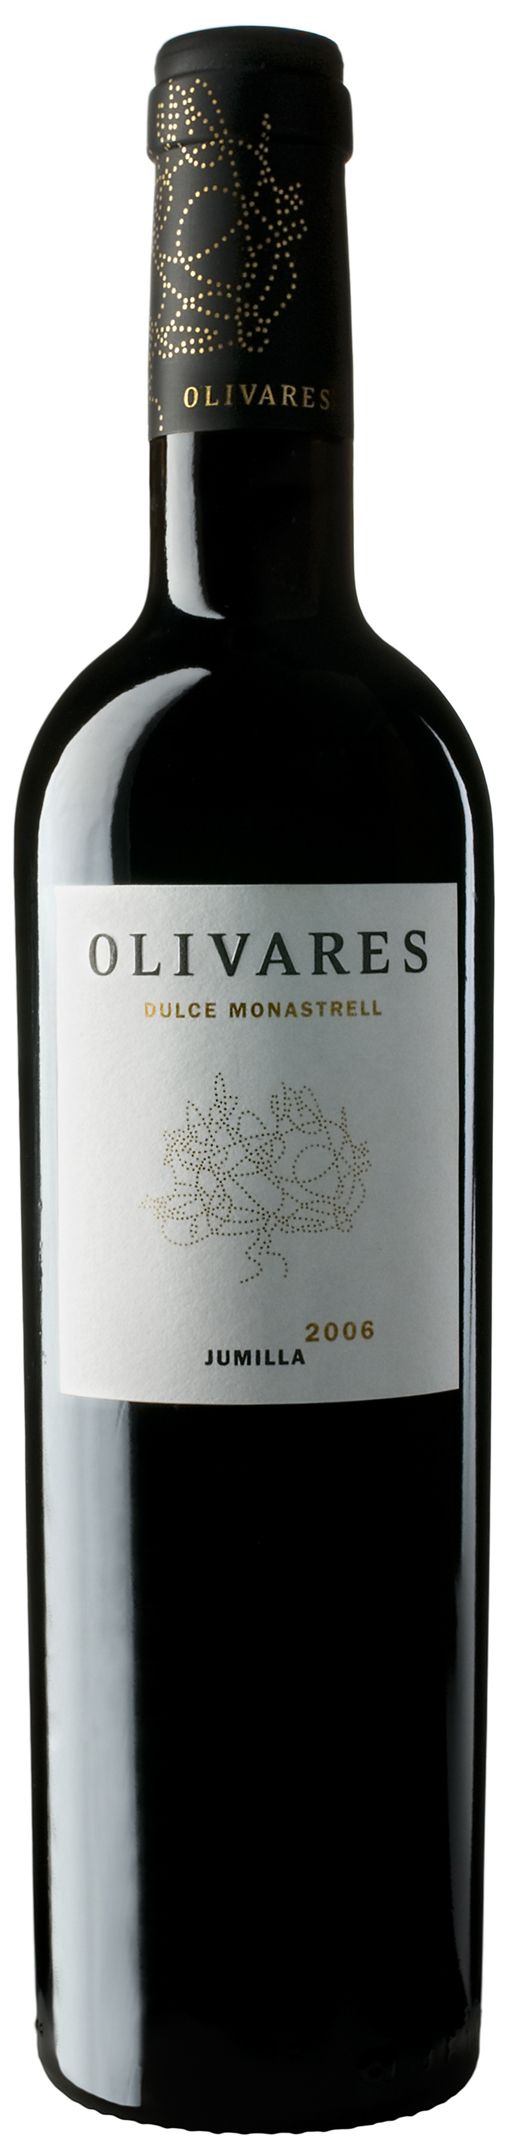 Olivares, Dulce Monastrell, 2006